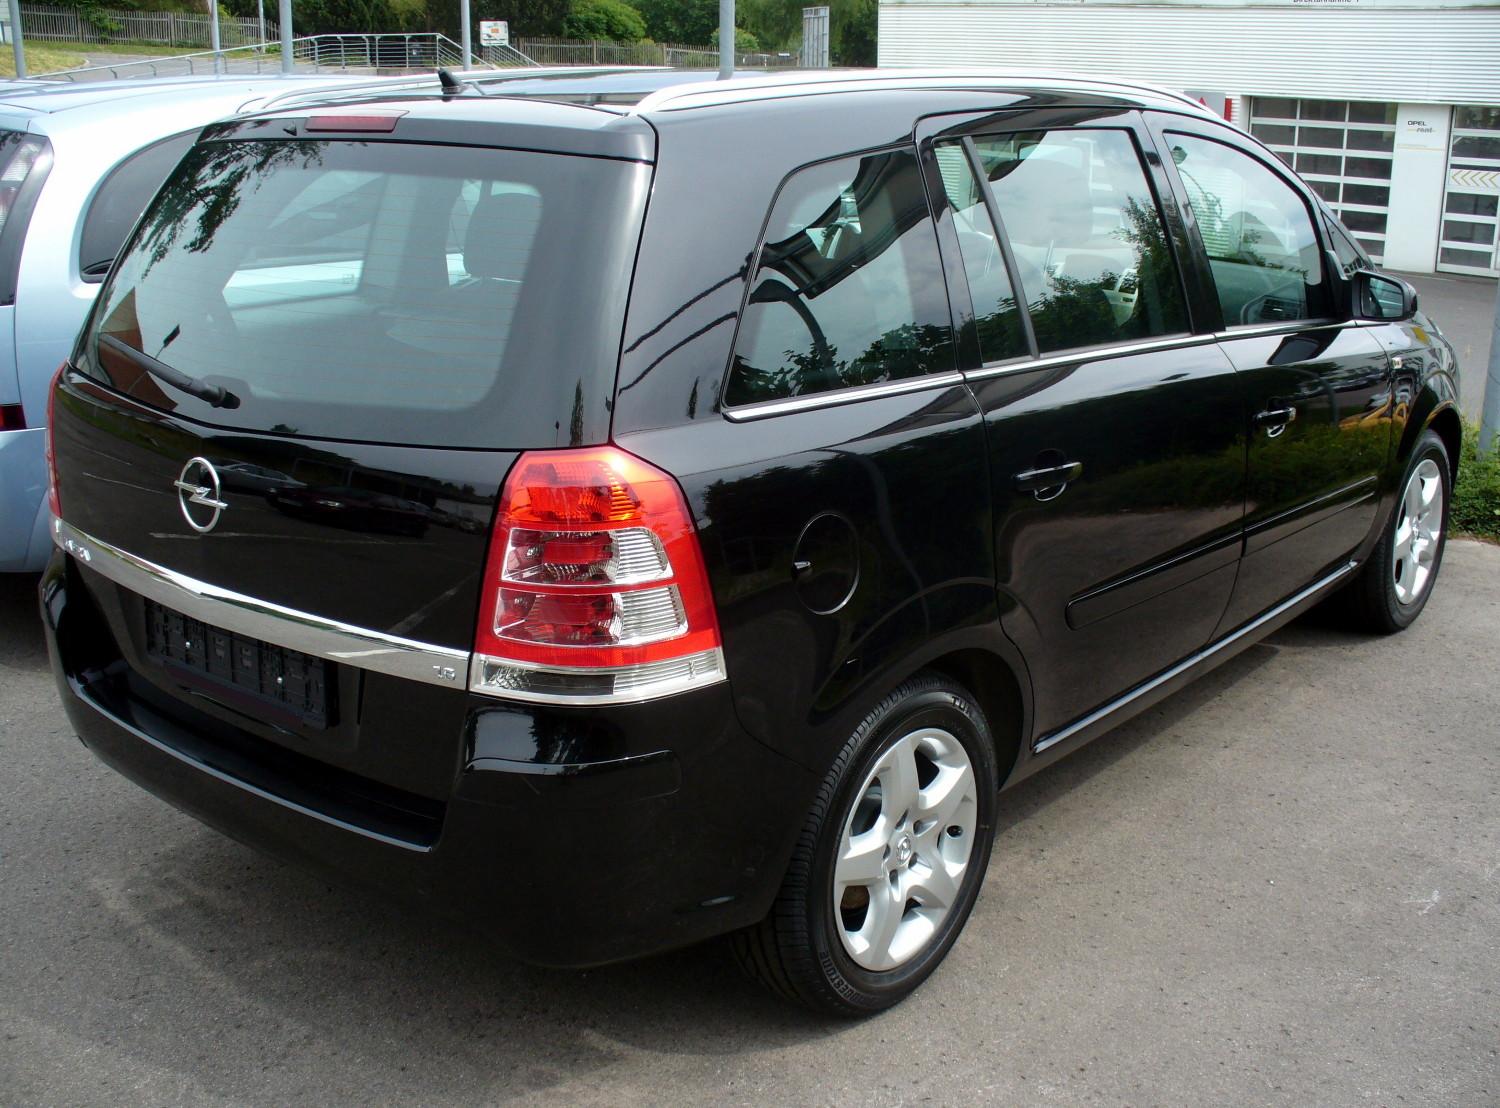 Зафира б 2008г. Opel Zafira b 2005-2012. Opel Zafira 2008. Опель Зафира 2008. Opel Zafira b 2007.